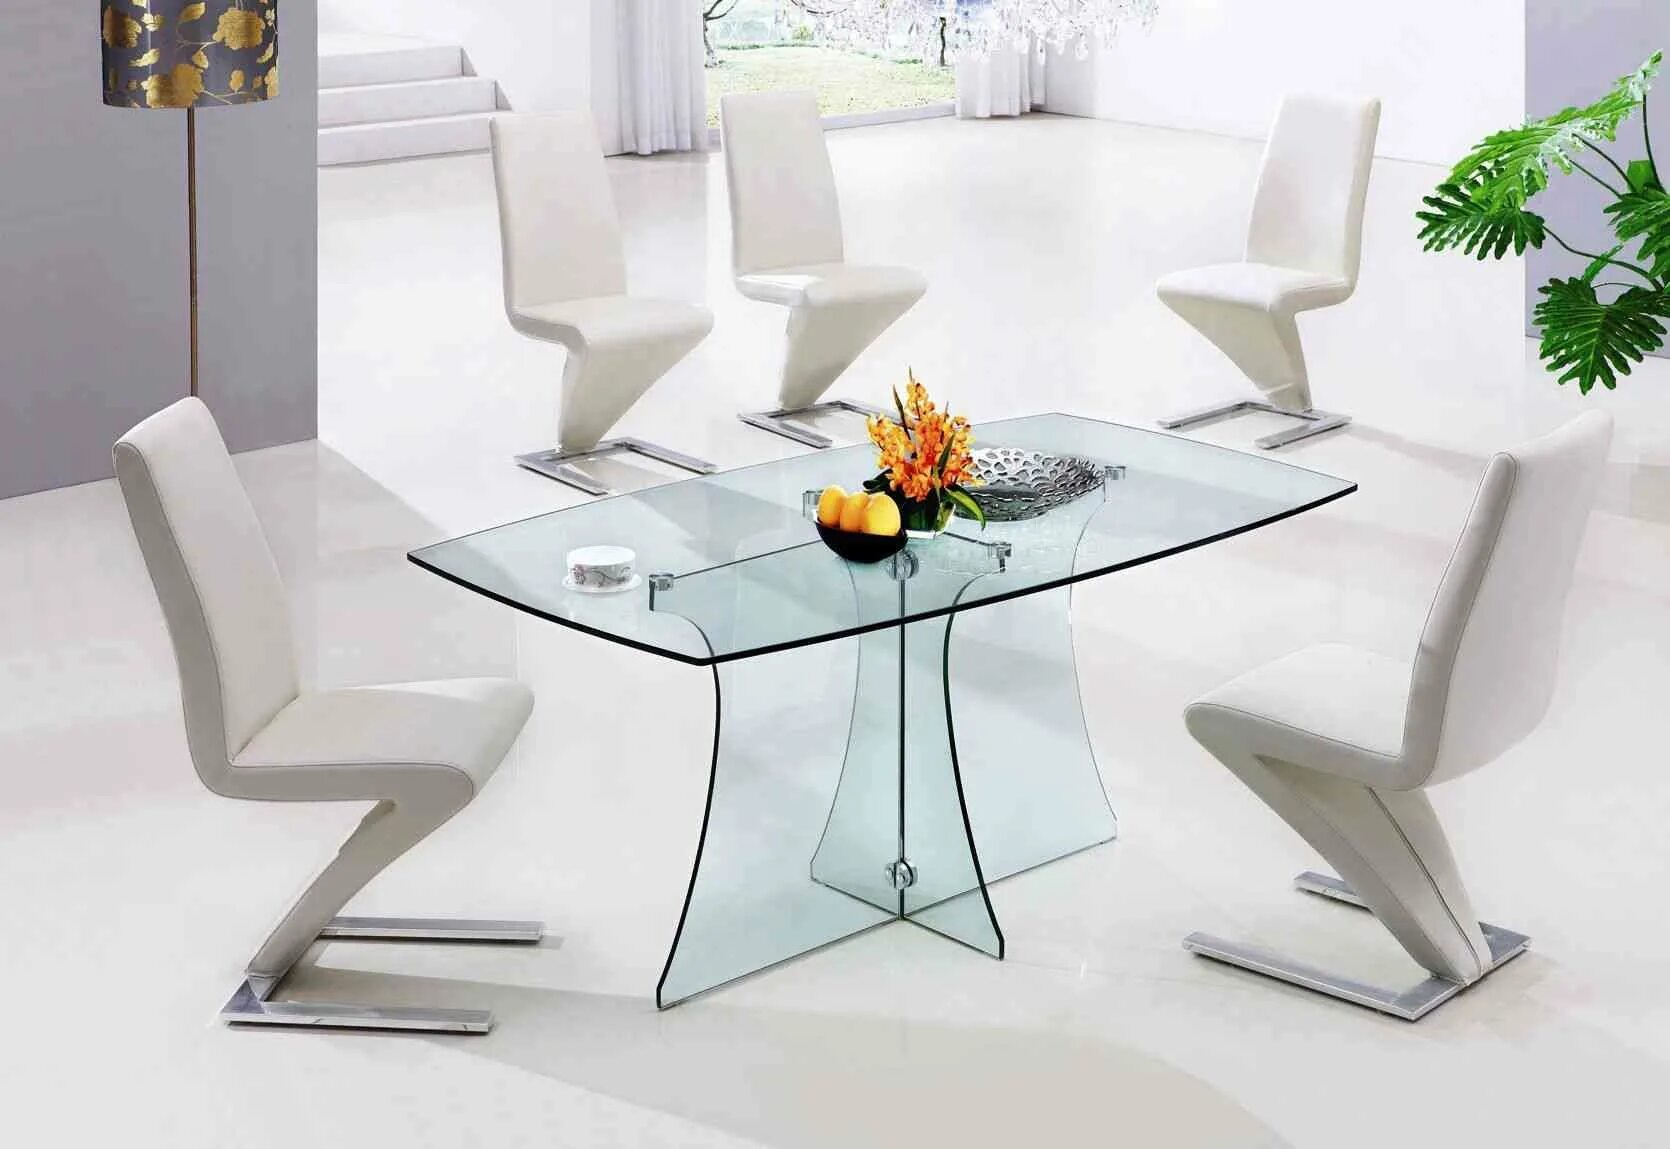 Стеклянный стол Burano c418c07. Обеденный стол из стекла. Стол стеклянный кухонный. Стеклянный стол для кухни.